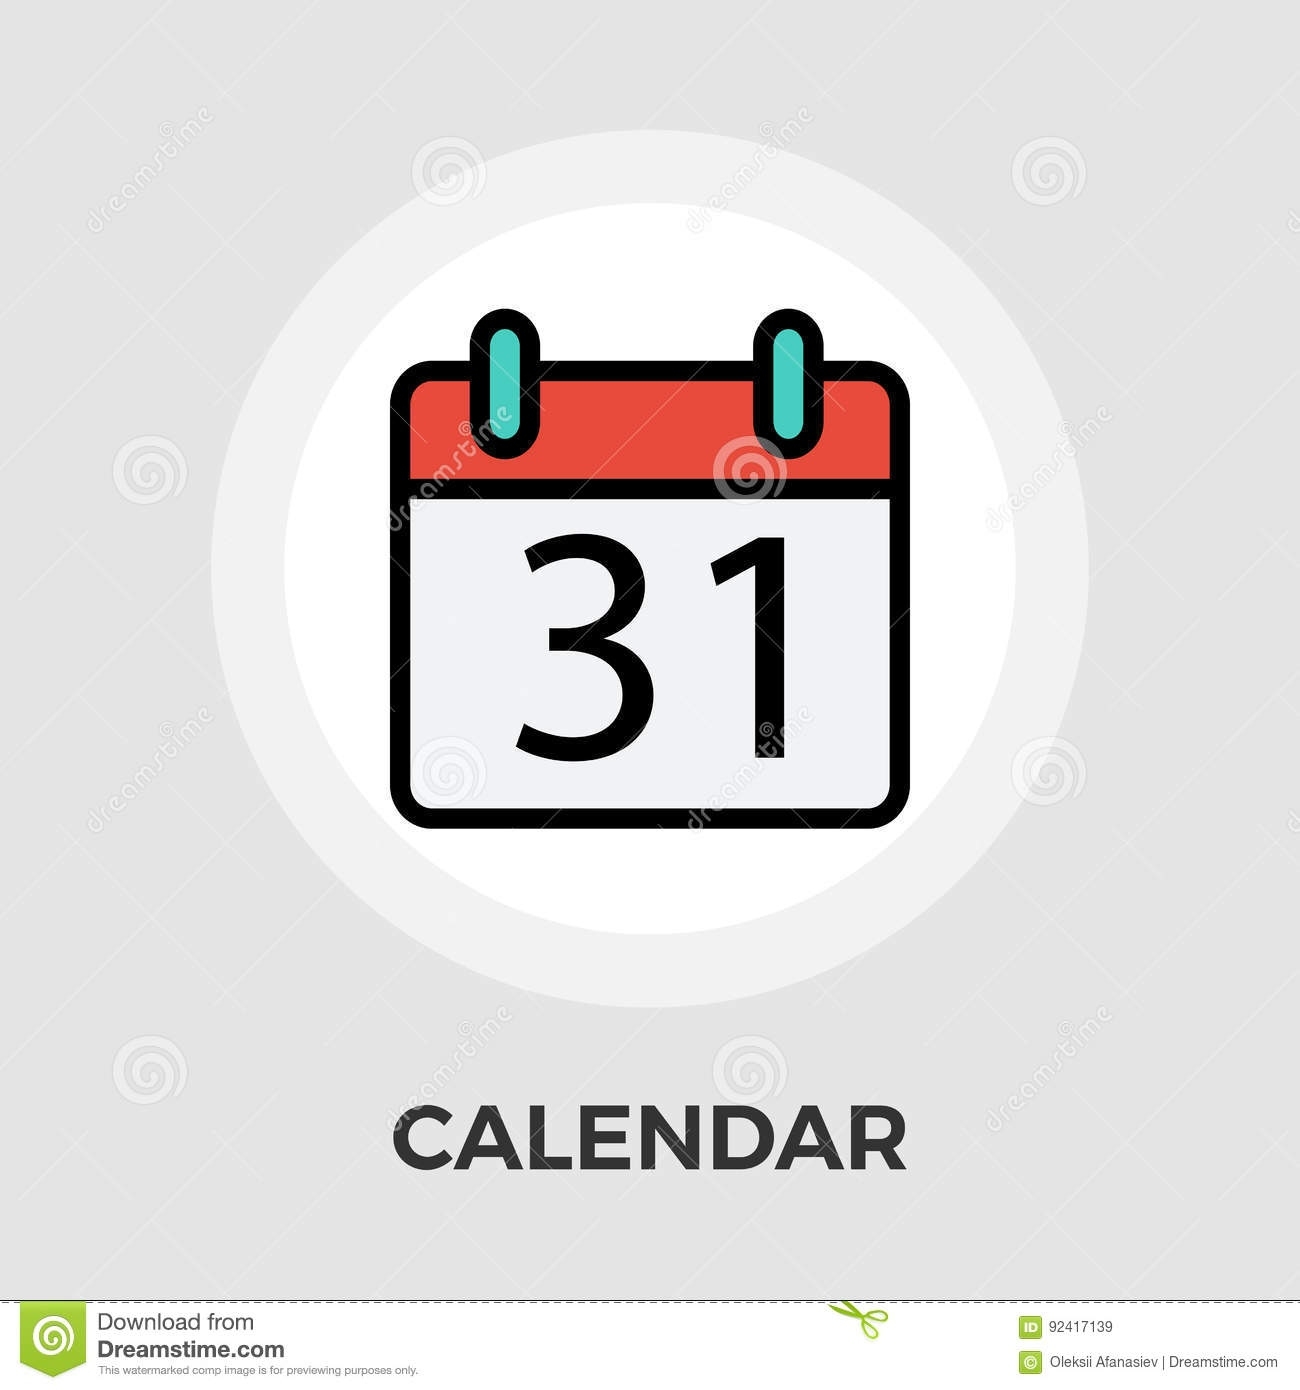 Calendar Flat Icon Stock Vector. Illustration Of Element - 92417139 Download Calendar Icon Jpg